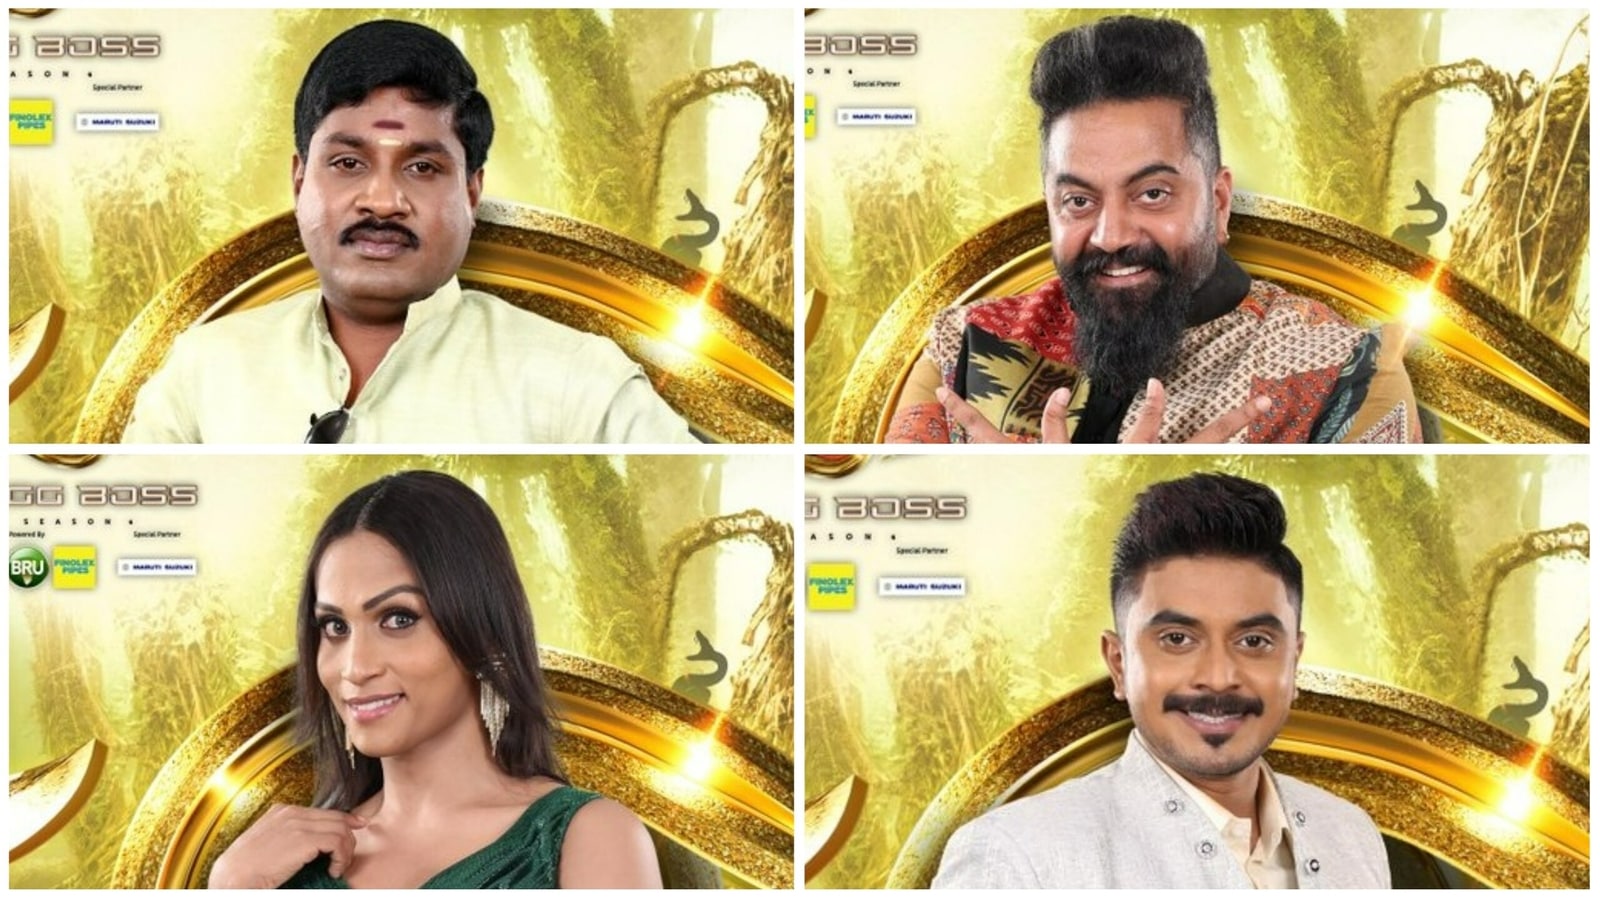 Bigg Boss Tamil 6 Kamal Haasan returns as host, 20 contestants enter